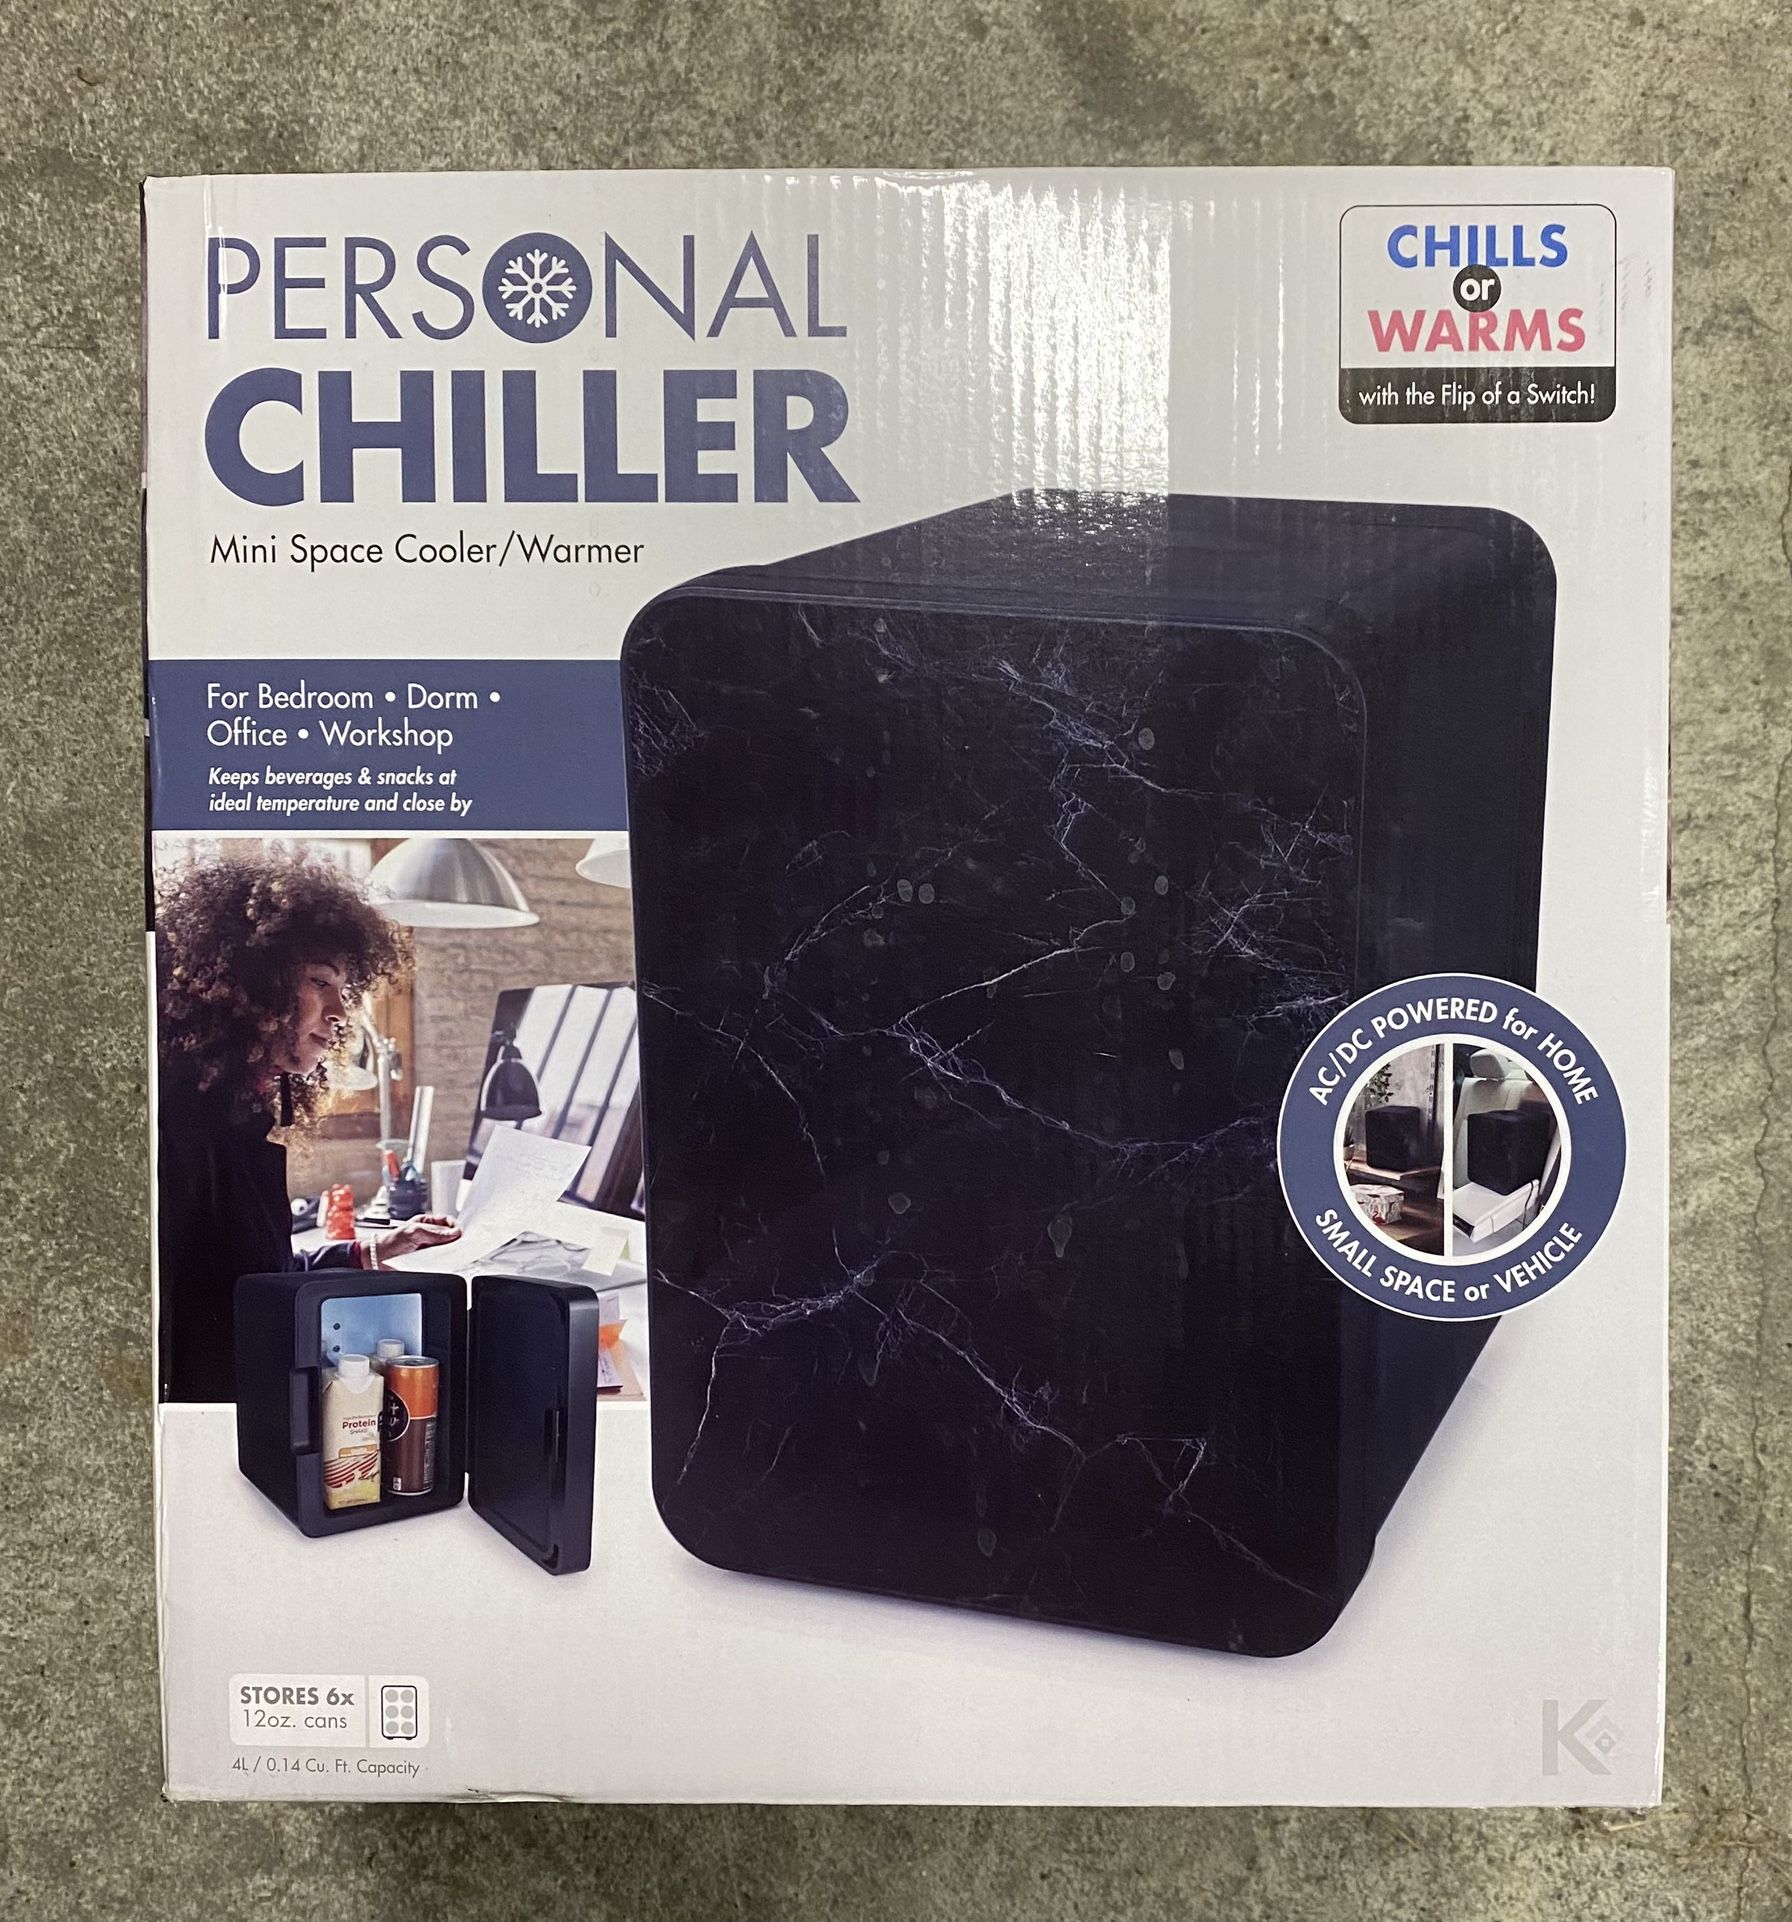 Portable Mini Fridge “Personal chiller”